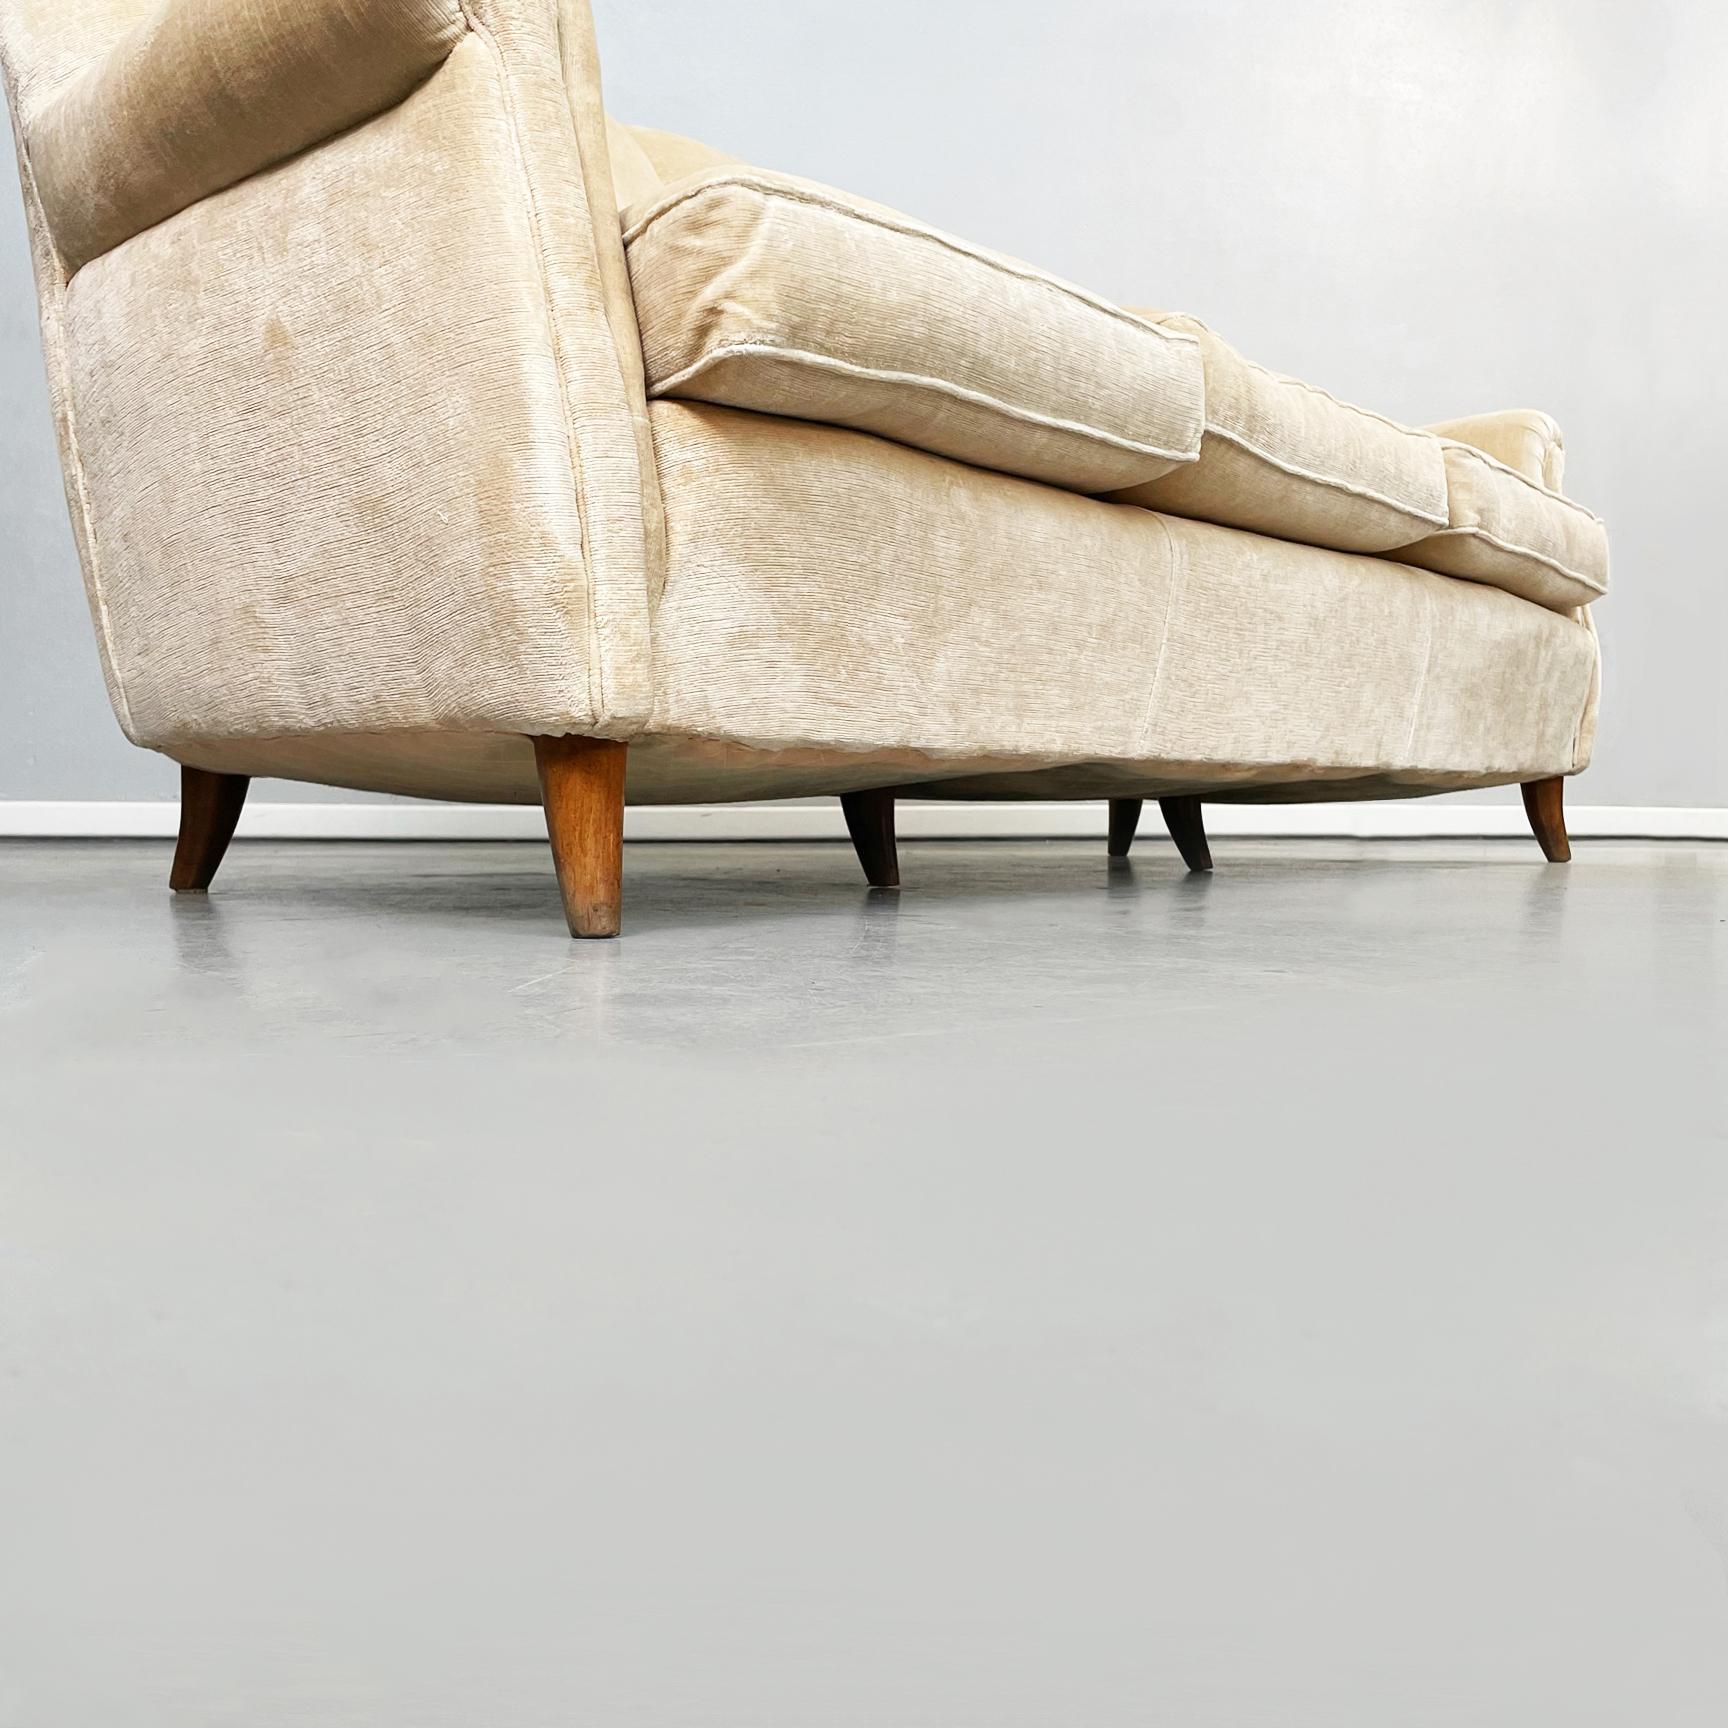 Italian Mid-Century Modern Wooden Sofa in Beige Fabric, 1960s For Sale 12